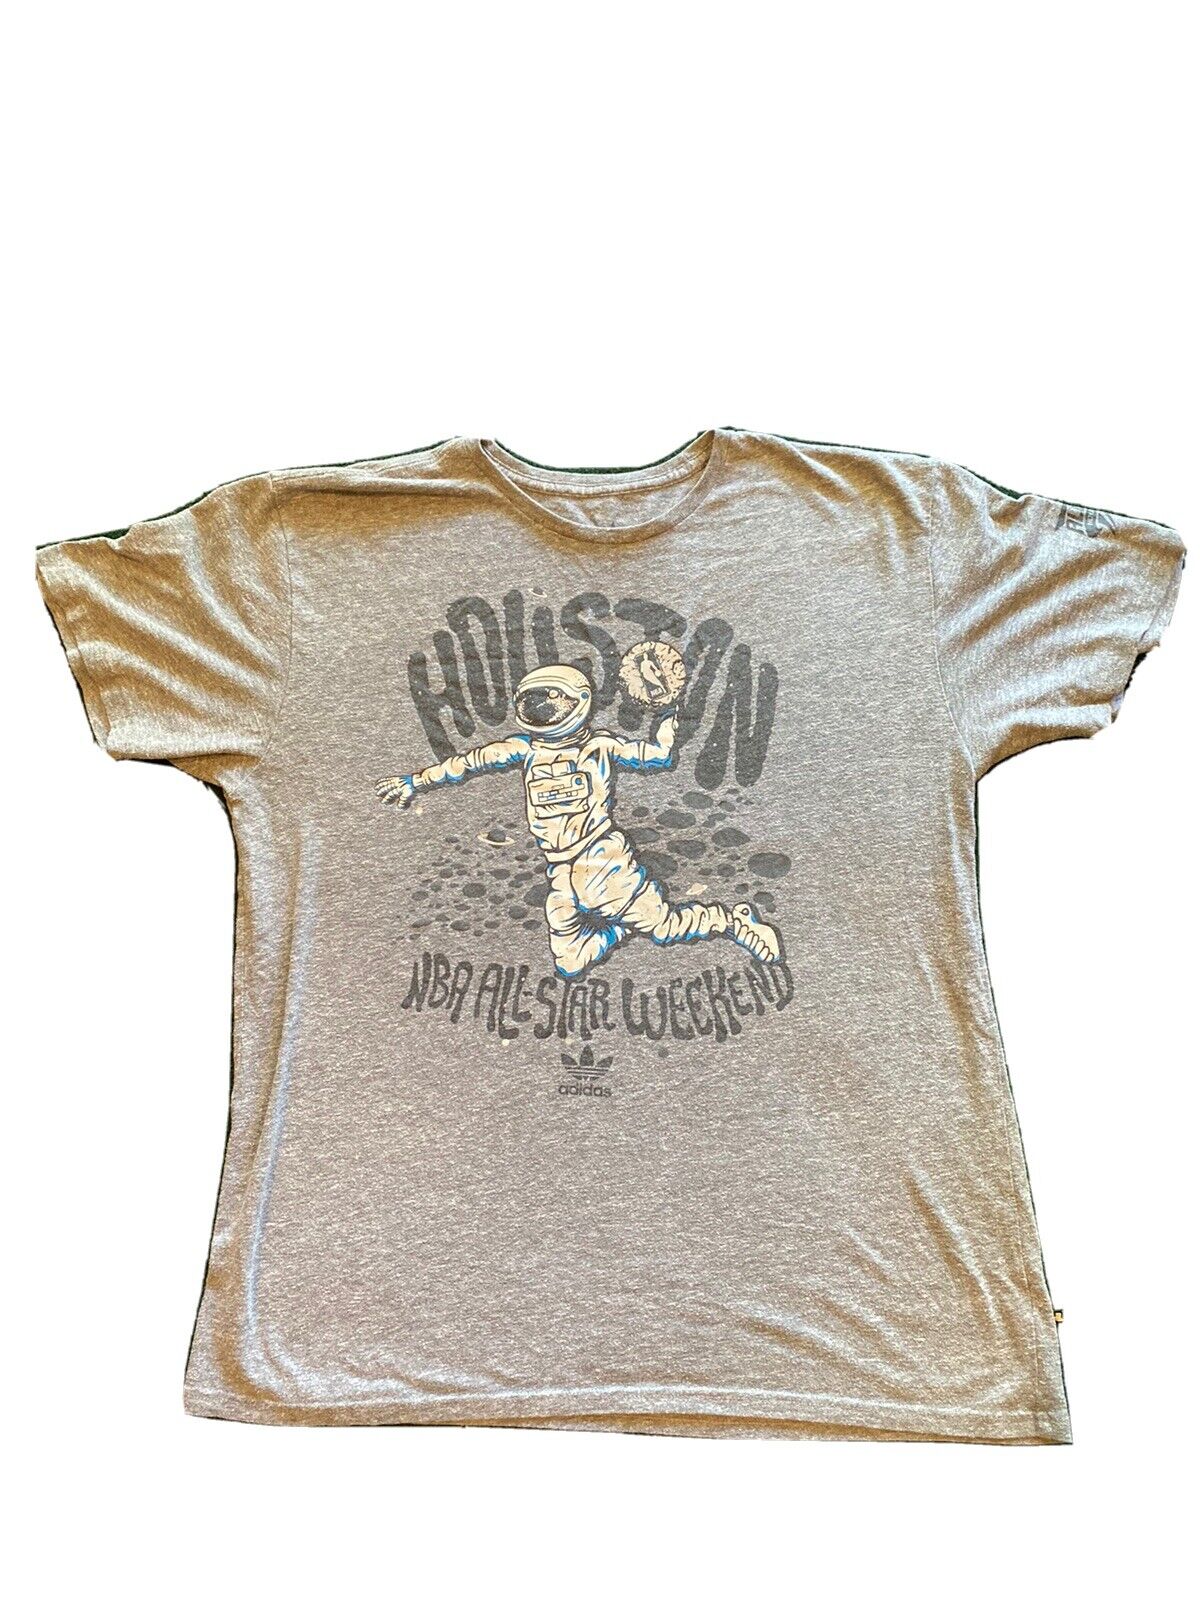 Rare Vintage Houston NBA All Star Game Shirt XL - image 1